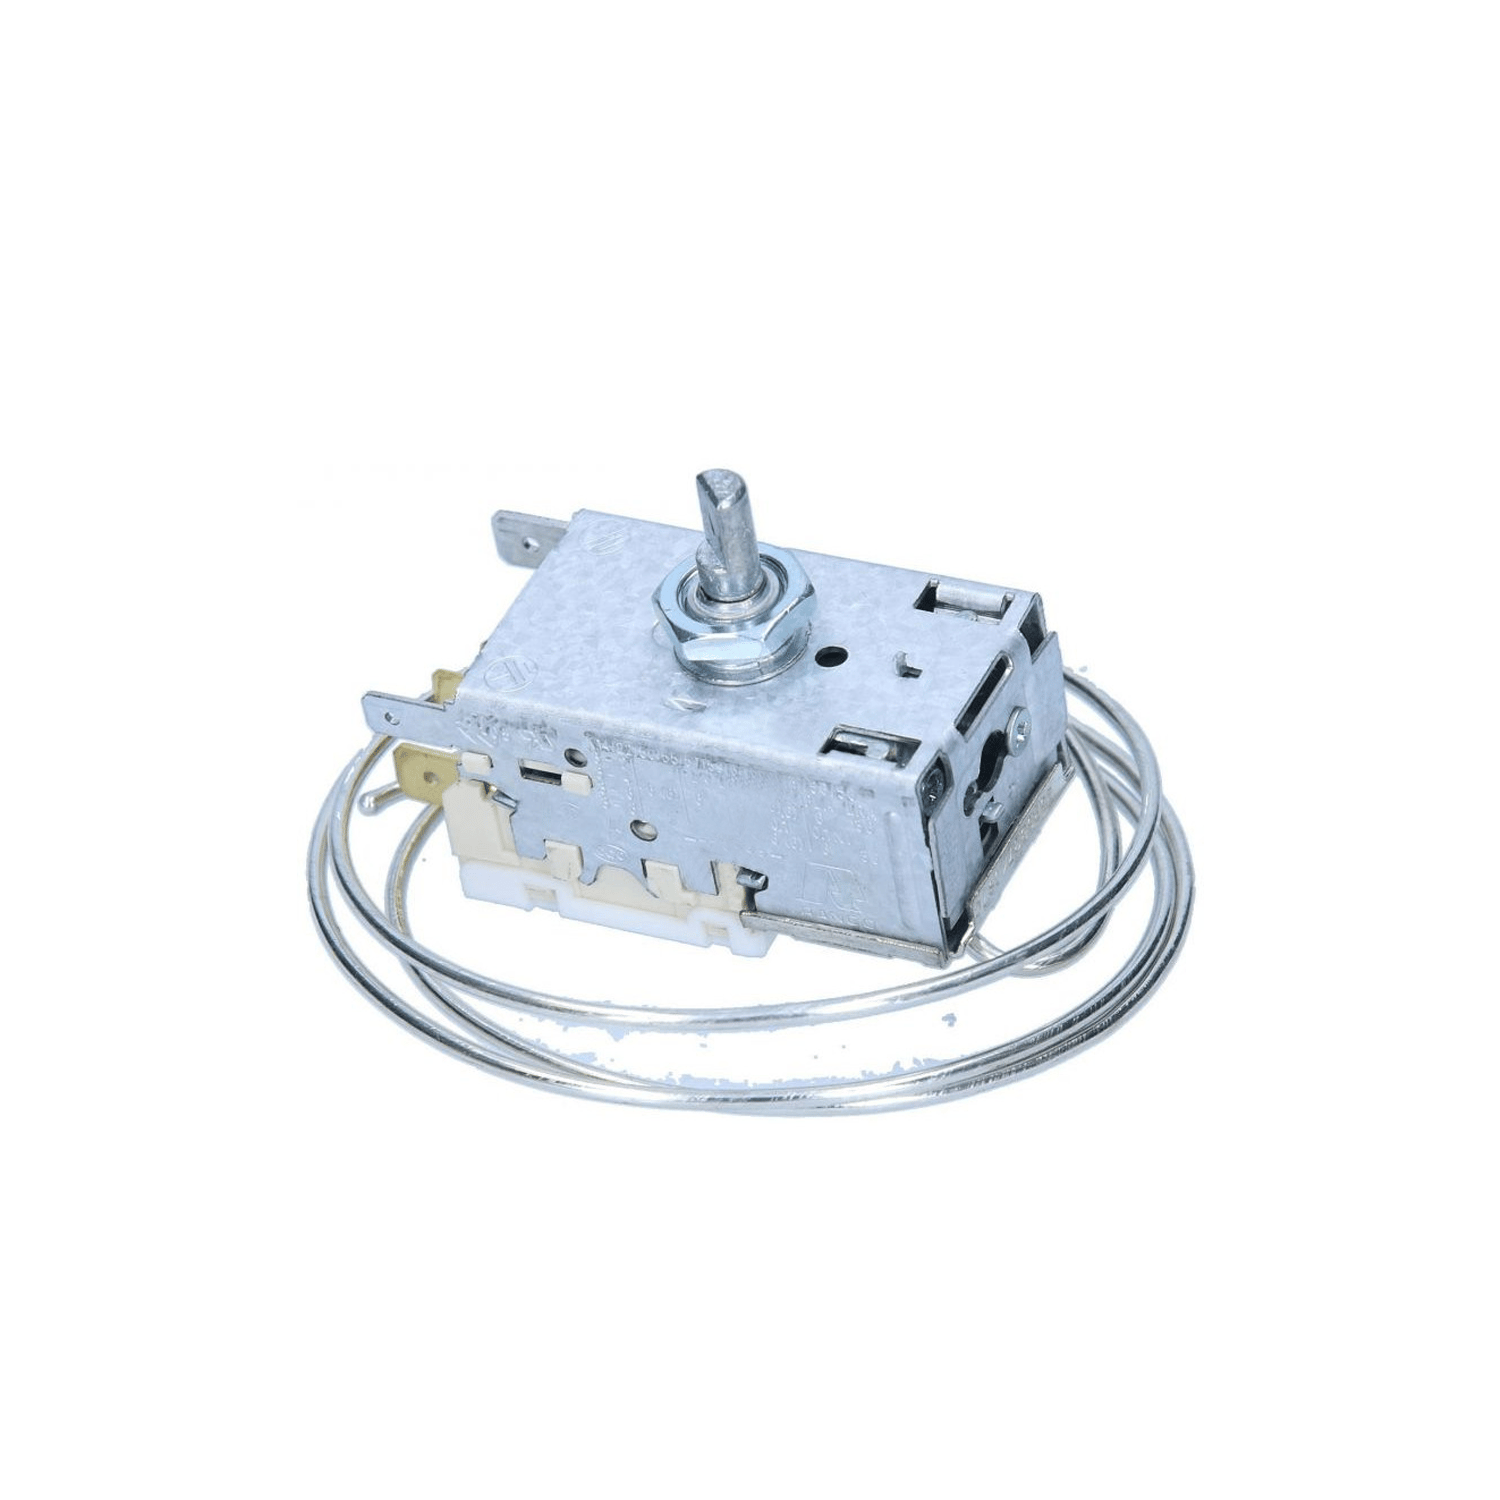 Thermostat Ranco K59-L2678 für Kühlschrank AEG 2262136761 , 6,3mm AMP